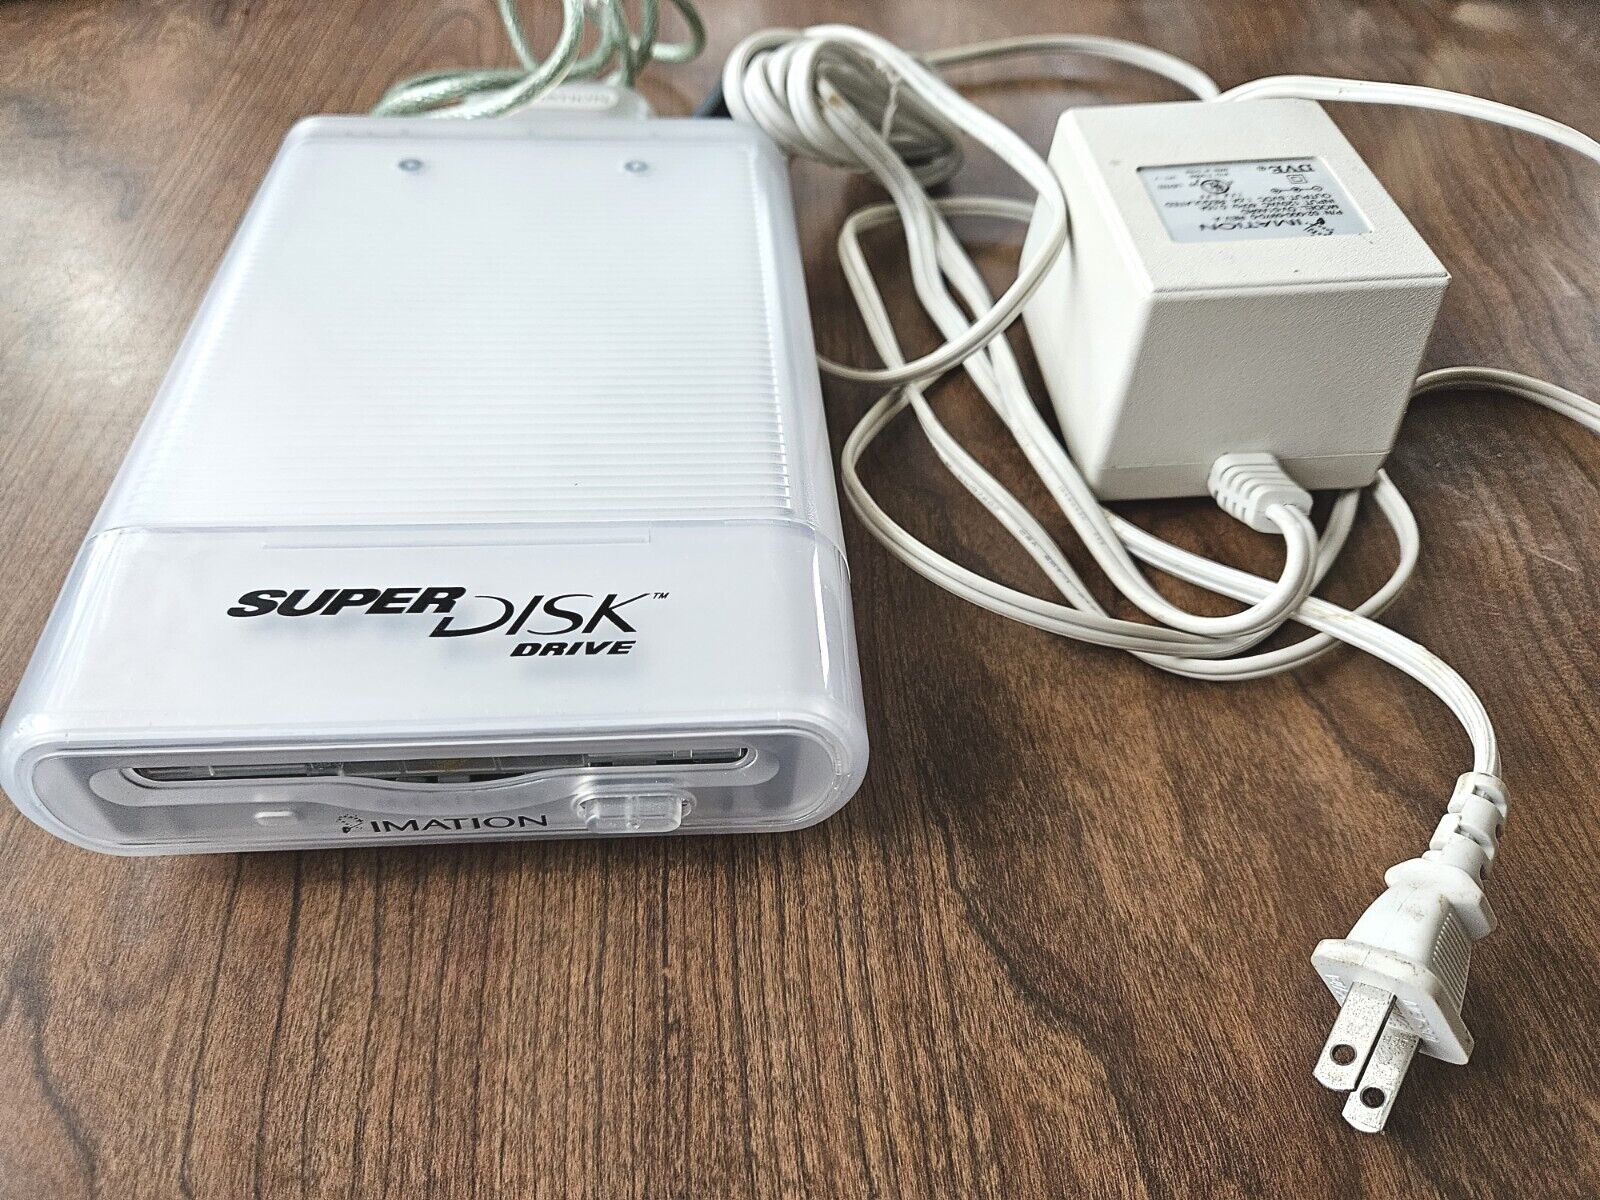 Imation SD-USB-M2 SuperDisk External USB Drive for Macintosh